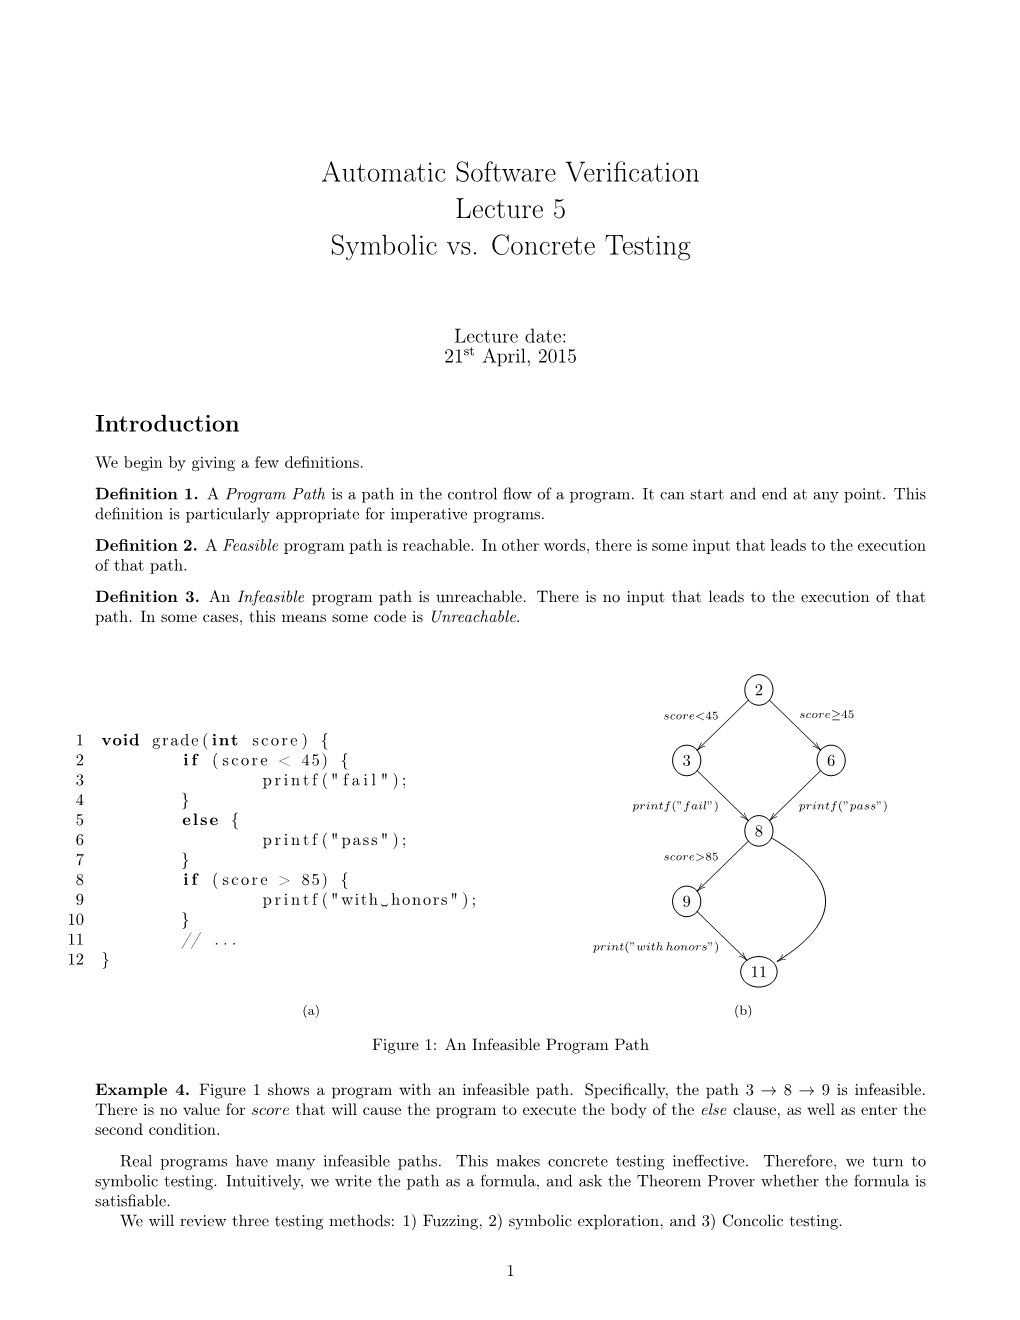 Automatic Software Verification Lecture 5 Symbolic Vs. Concrete Testing